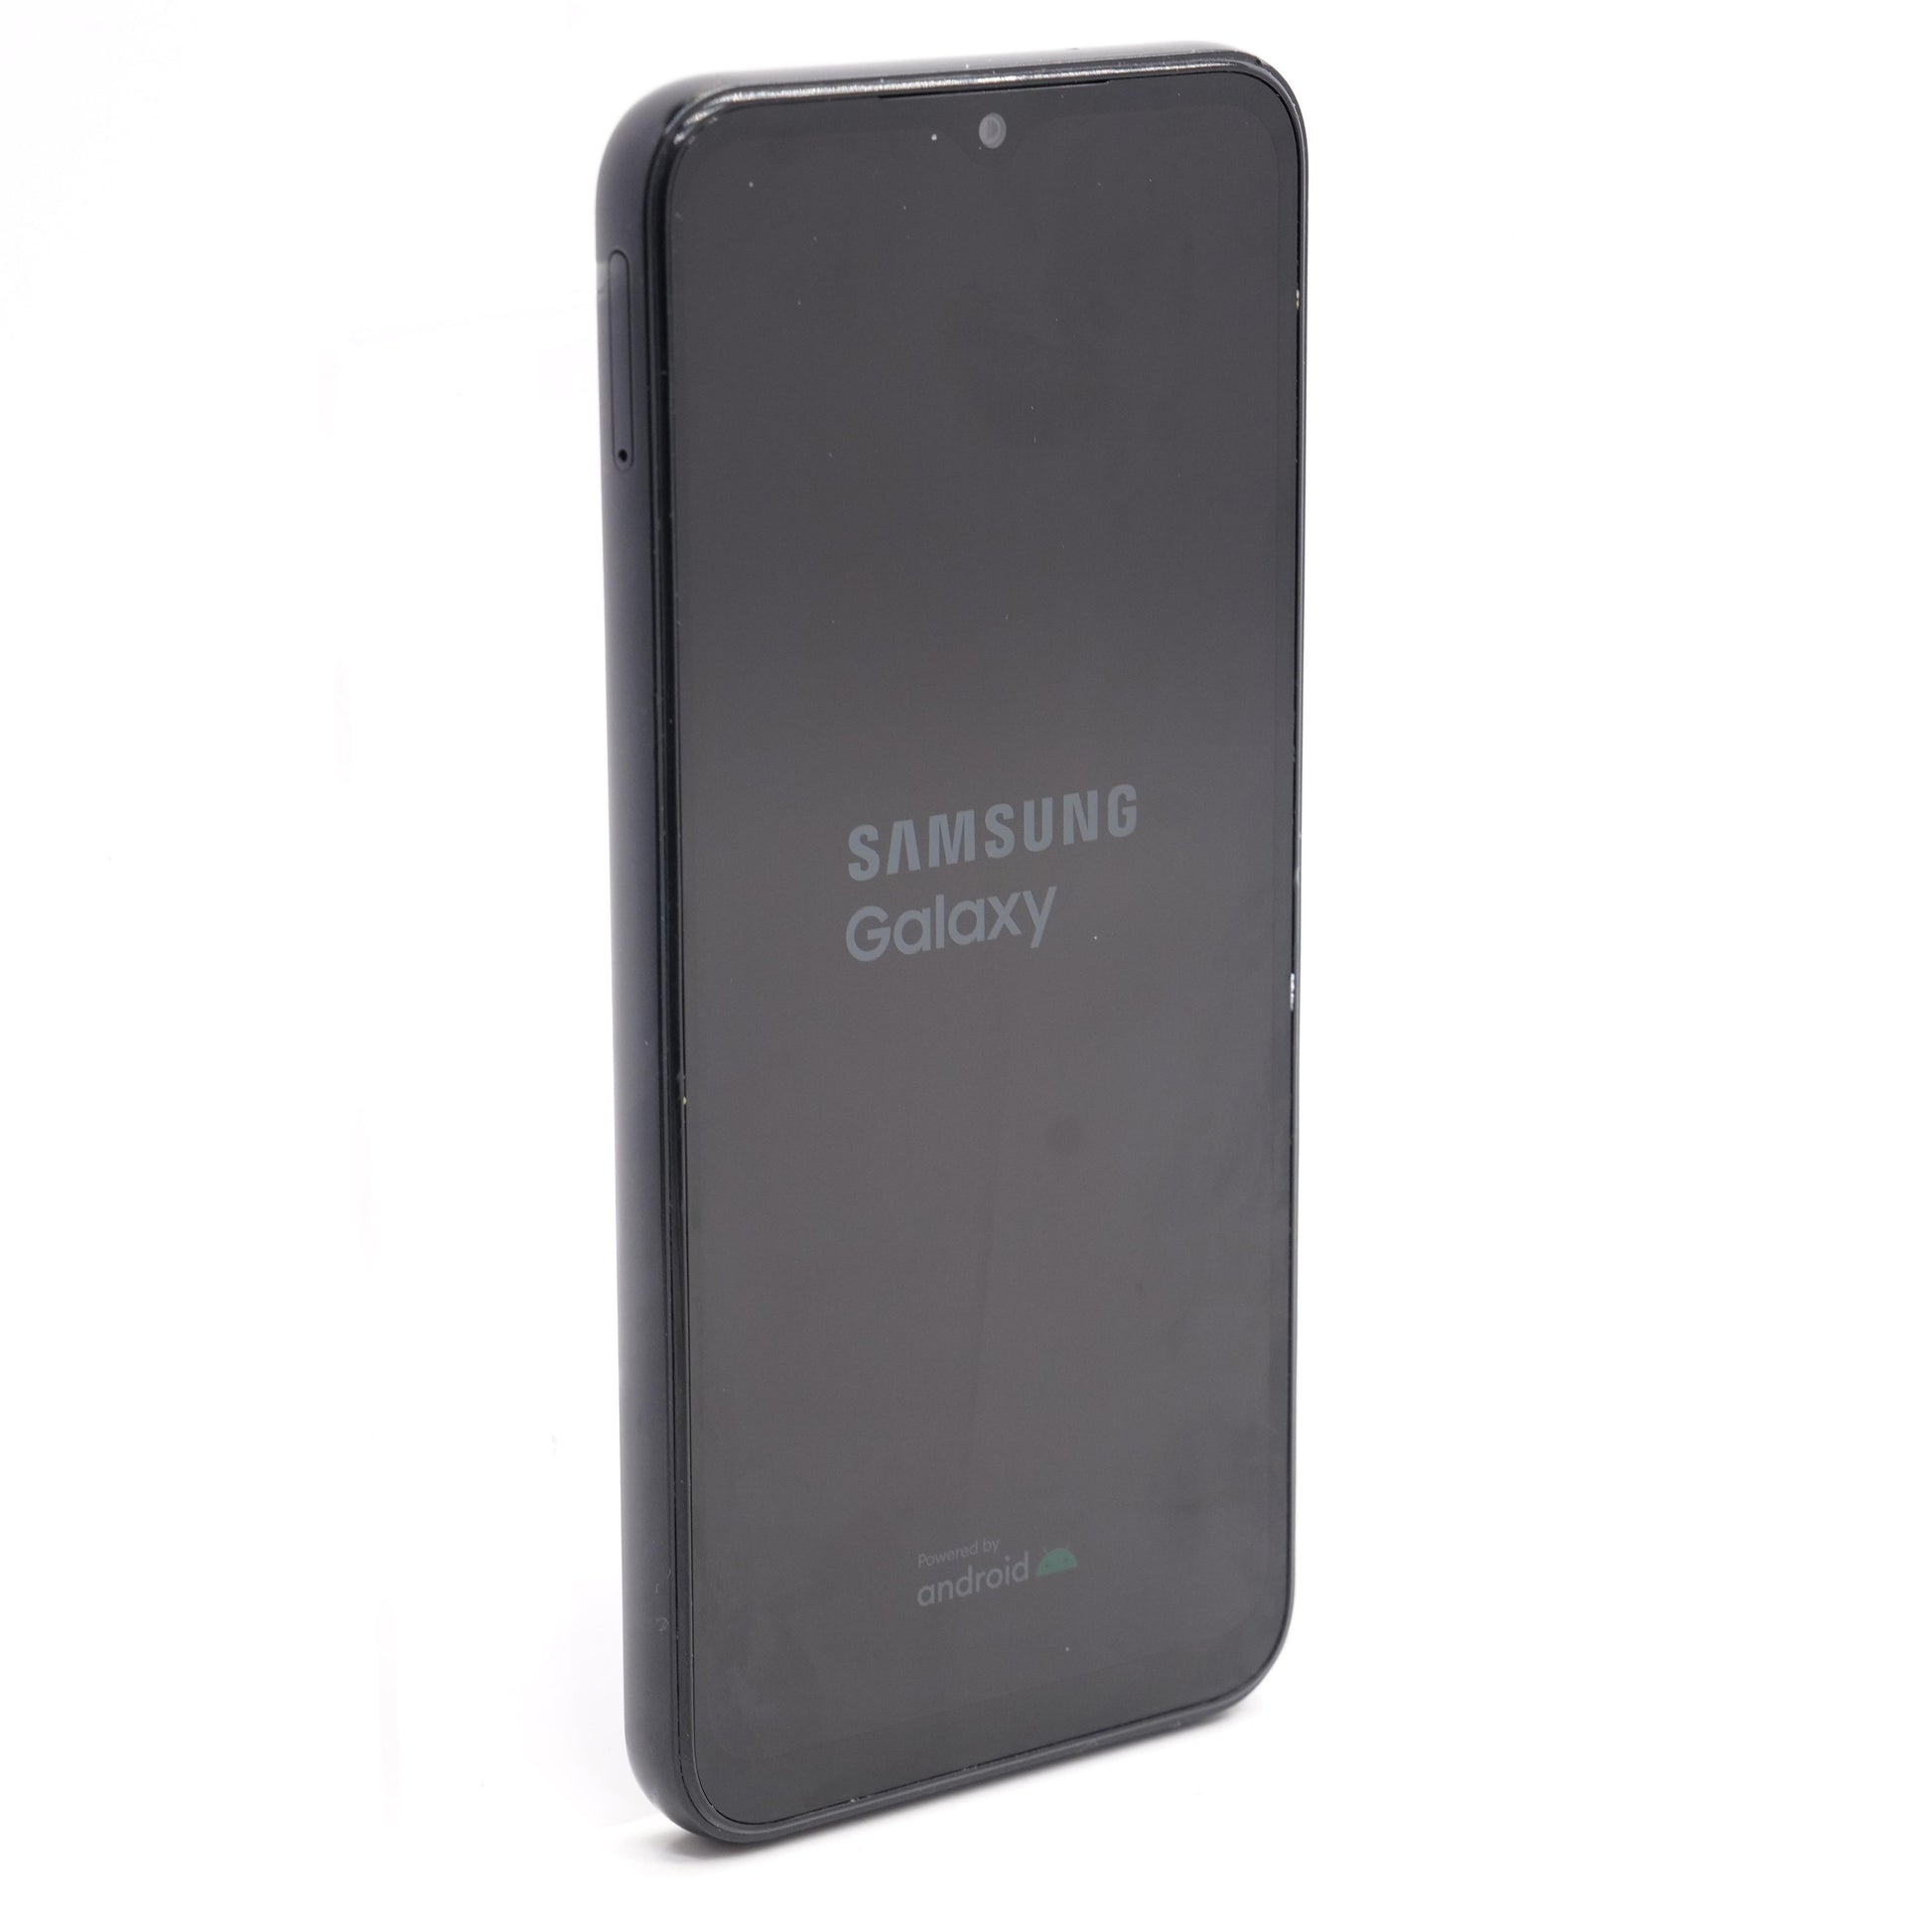 Samsung Galaxy A14 5G from Xfinity Mobile in Black